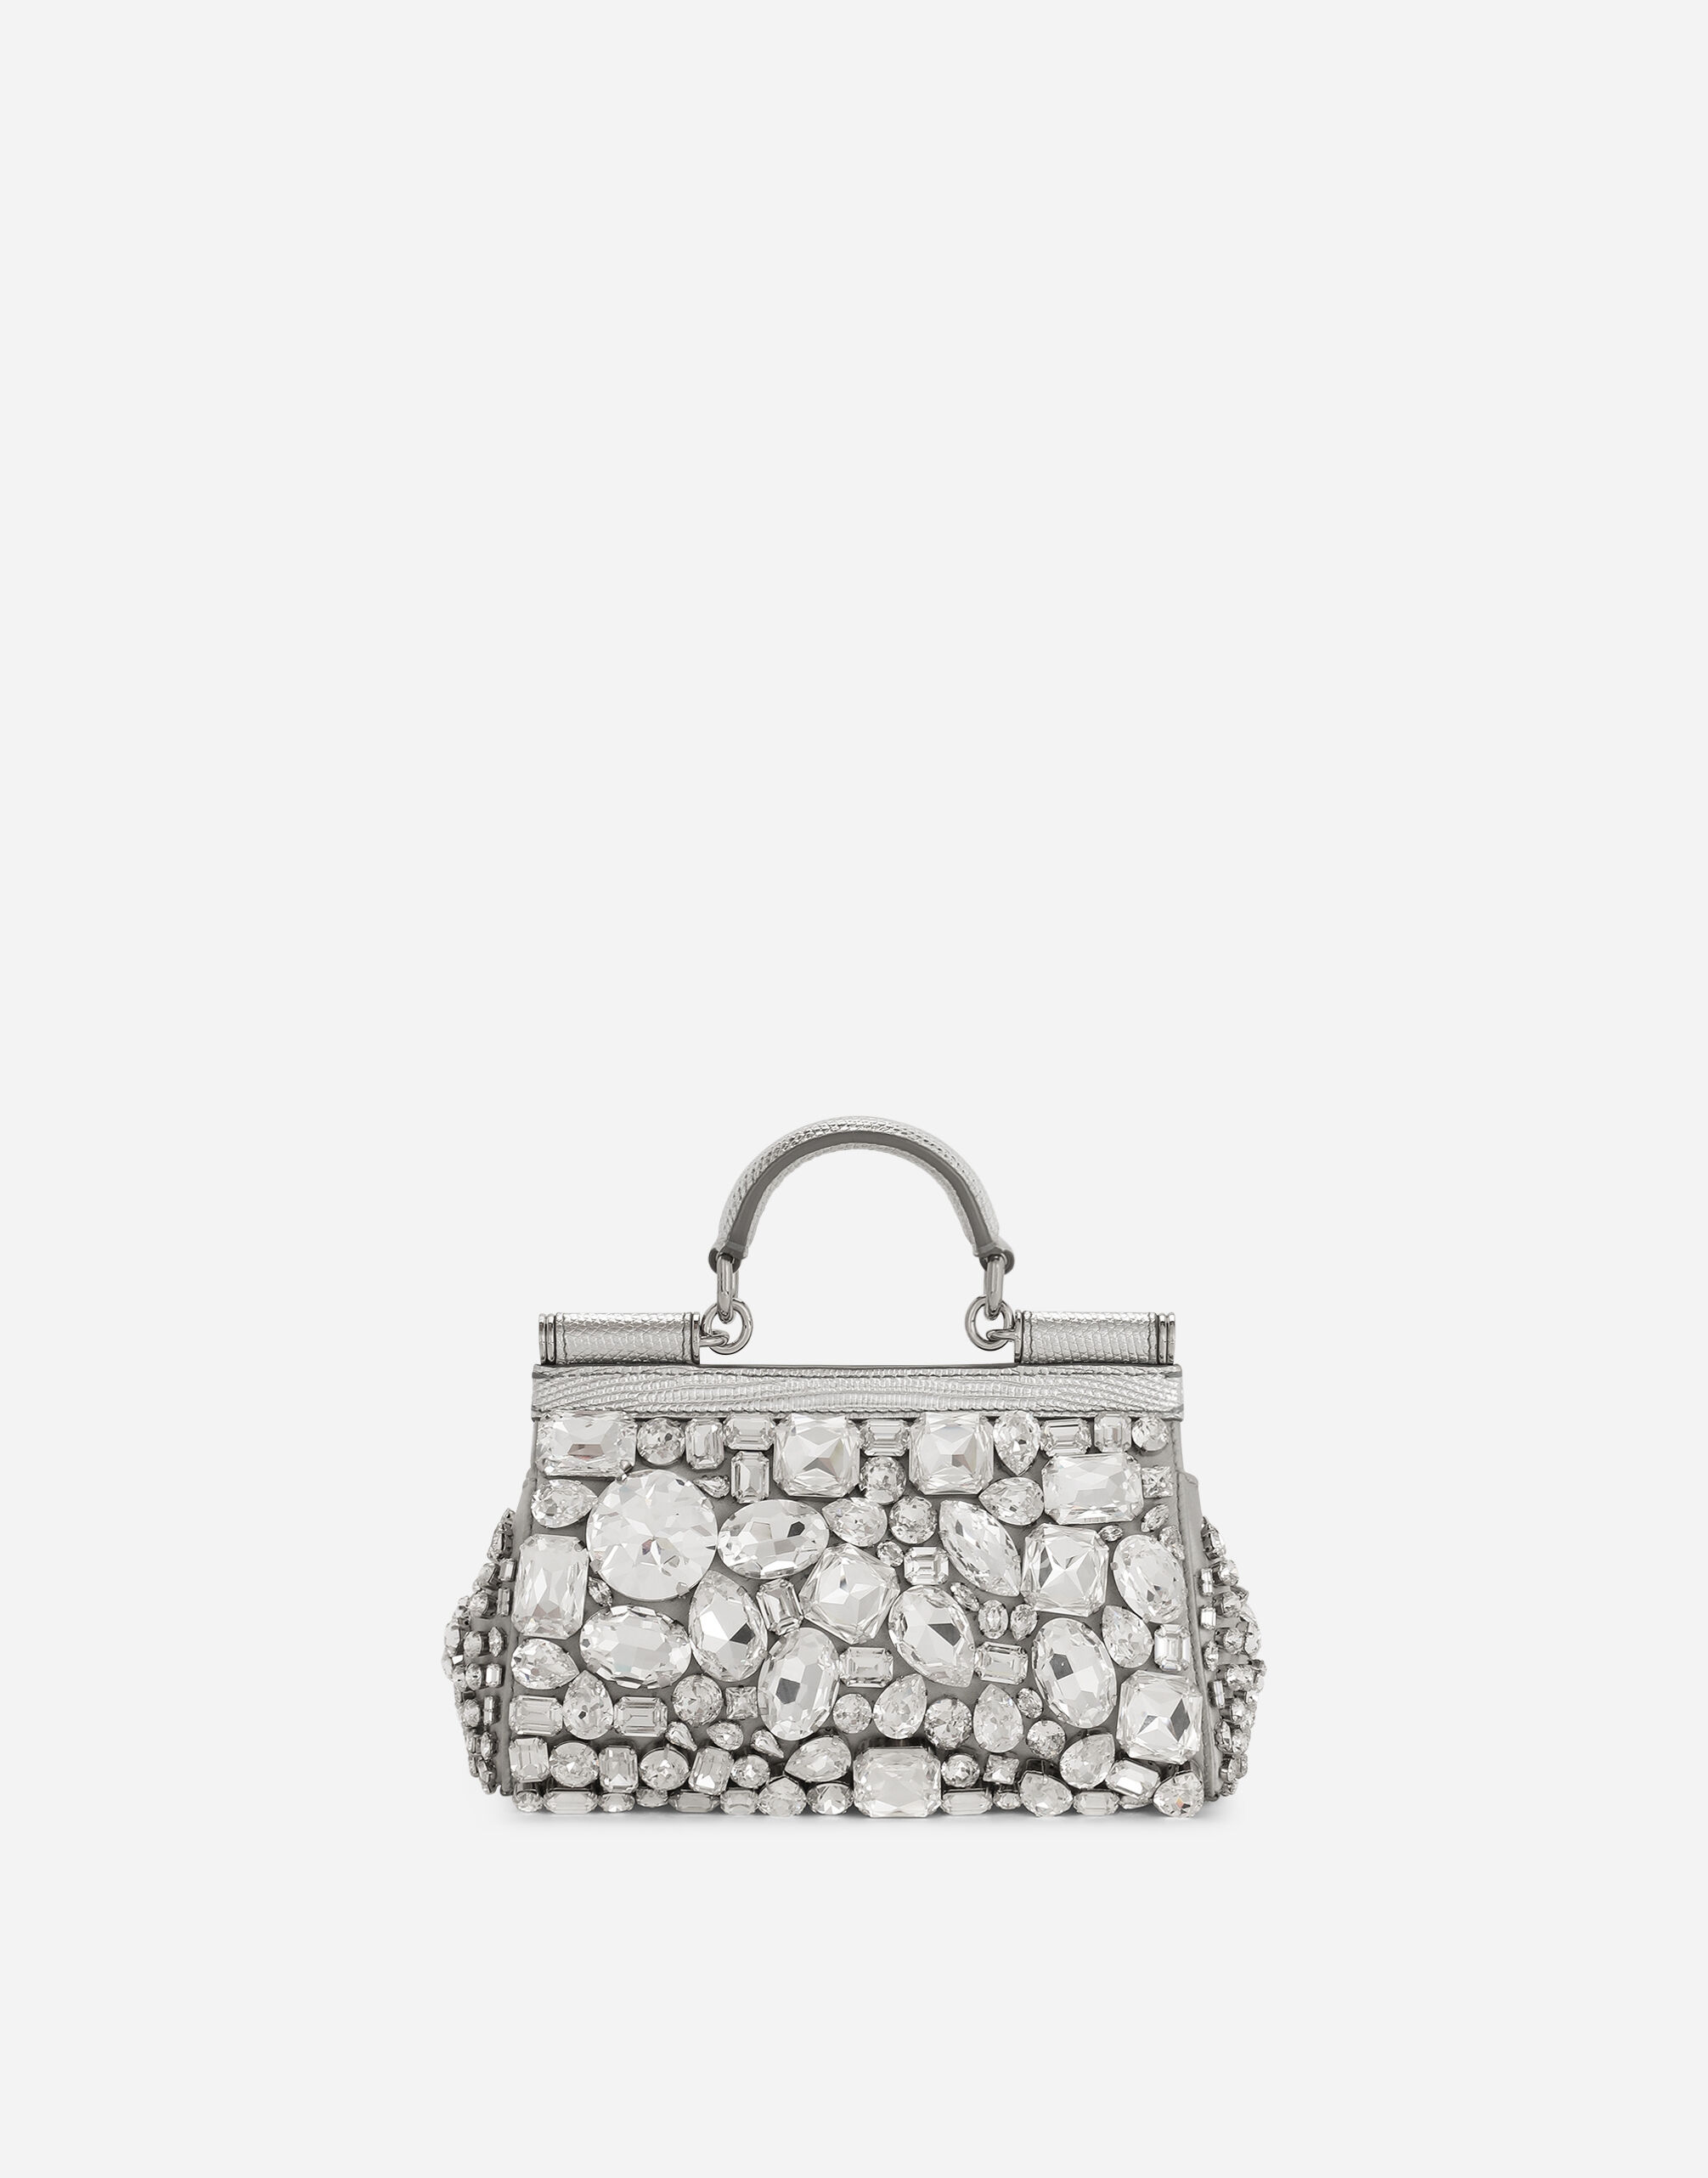 Monica Bellucci Dolce & Gabbana Handbag Campaign